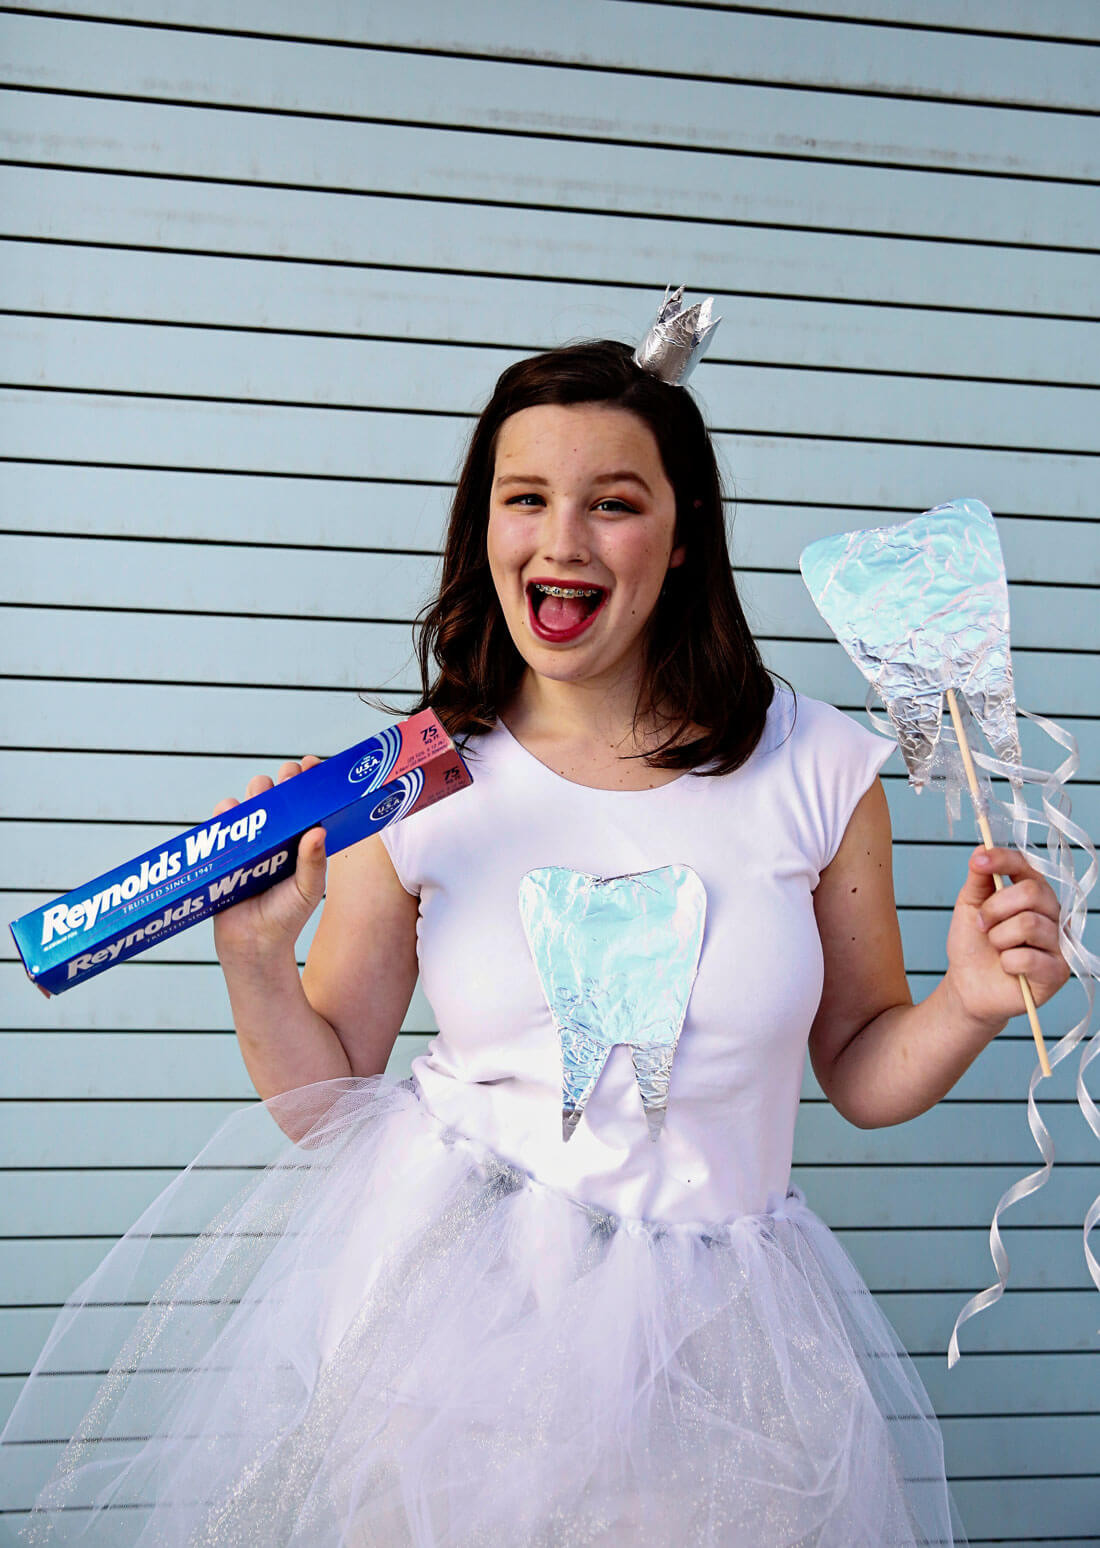 DIY Tooth Fairy Costume
 Last Minute Halloween Costumes